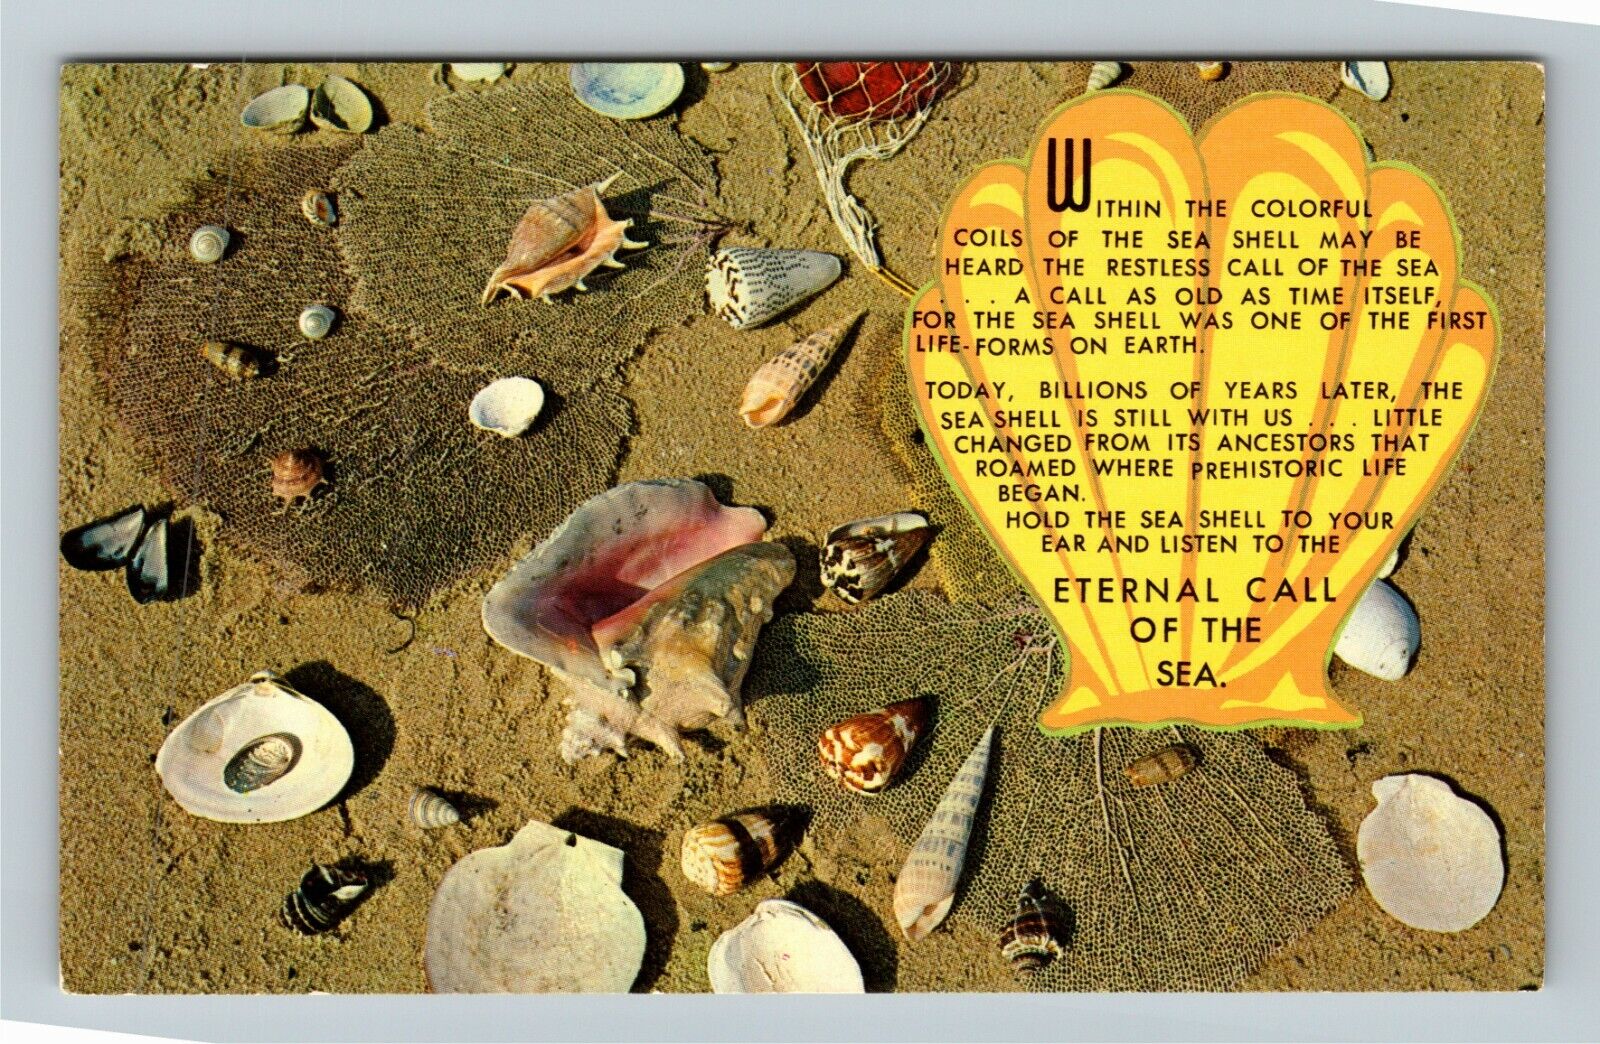 MA-Massachusetts, General Greeting, Shells and Beach, Vintage Postcard